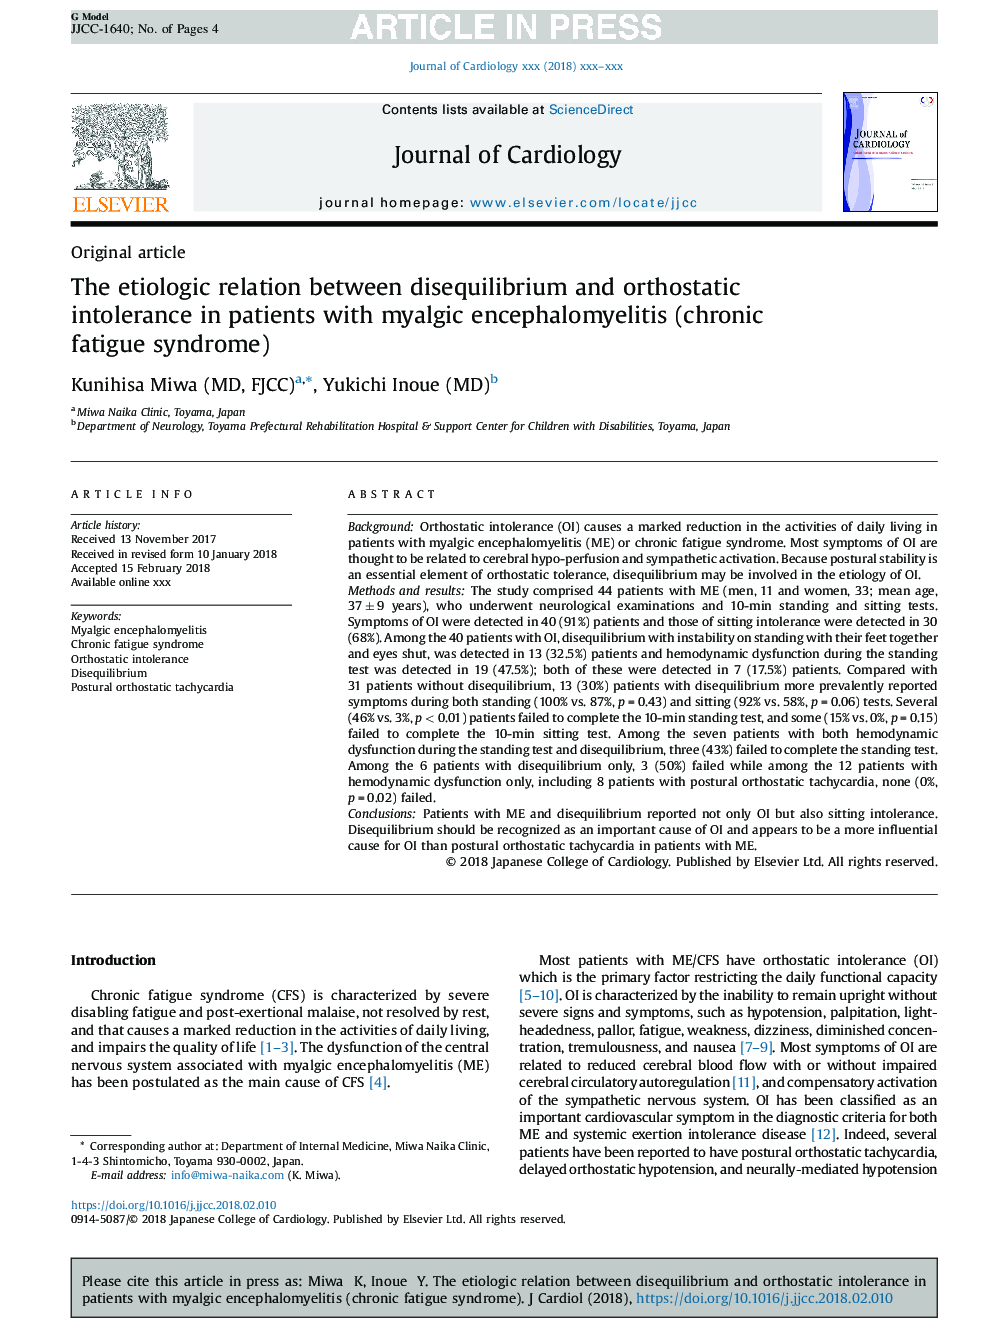 The etiologic relation between disequilibrium and orthostatic intolerance in patients with myalgic encephalomyelitis (chronic fatigue syndrome)